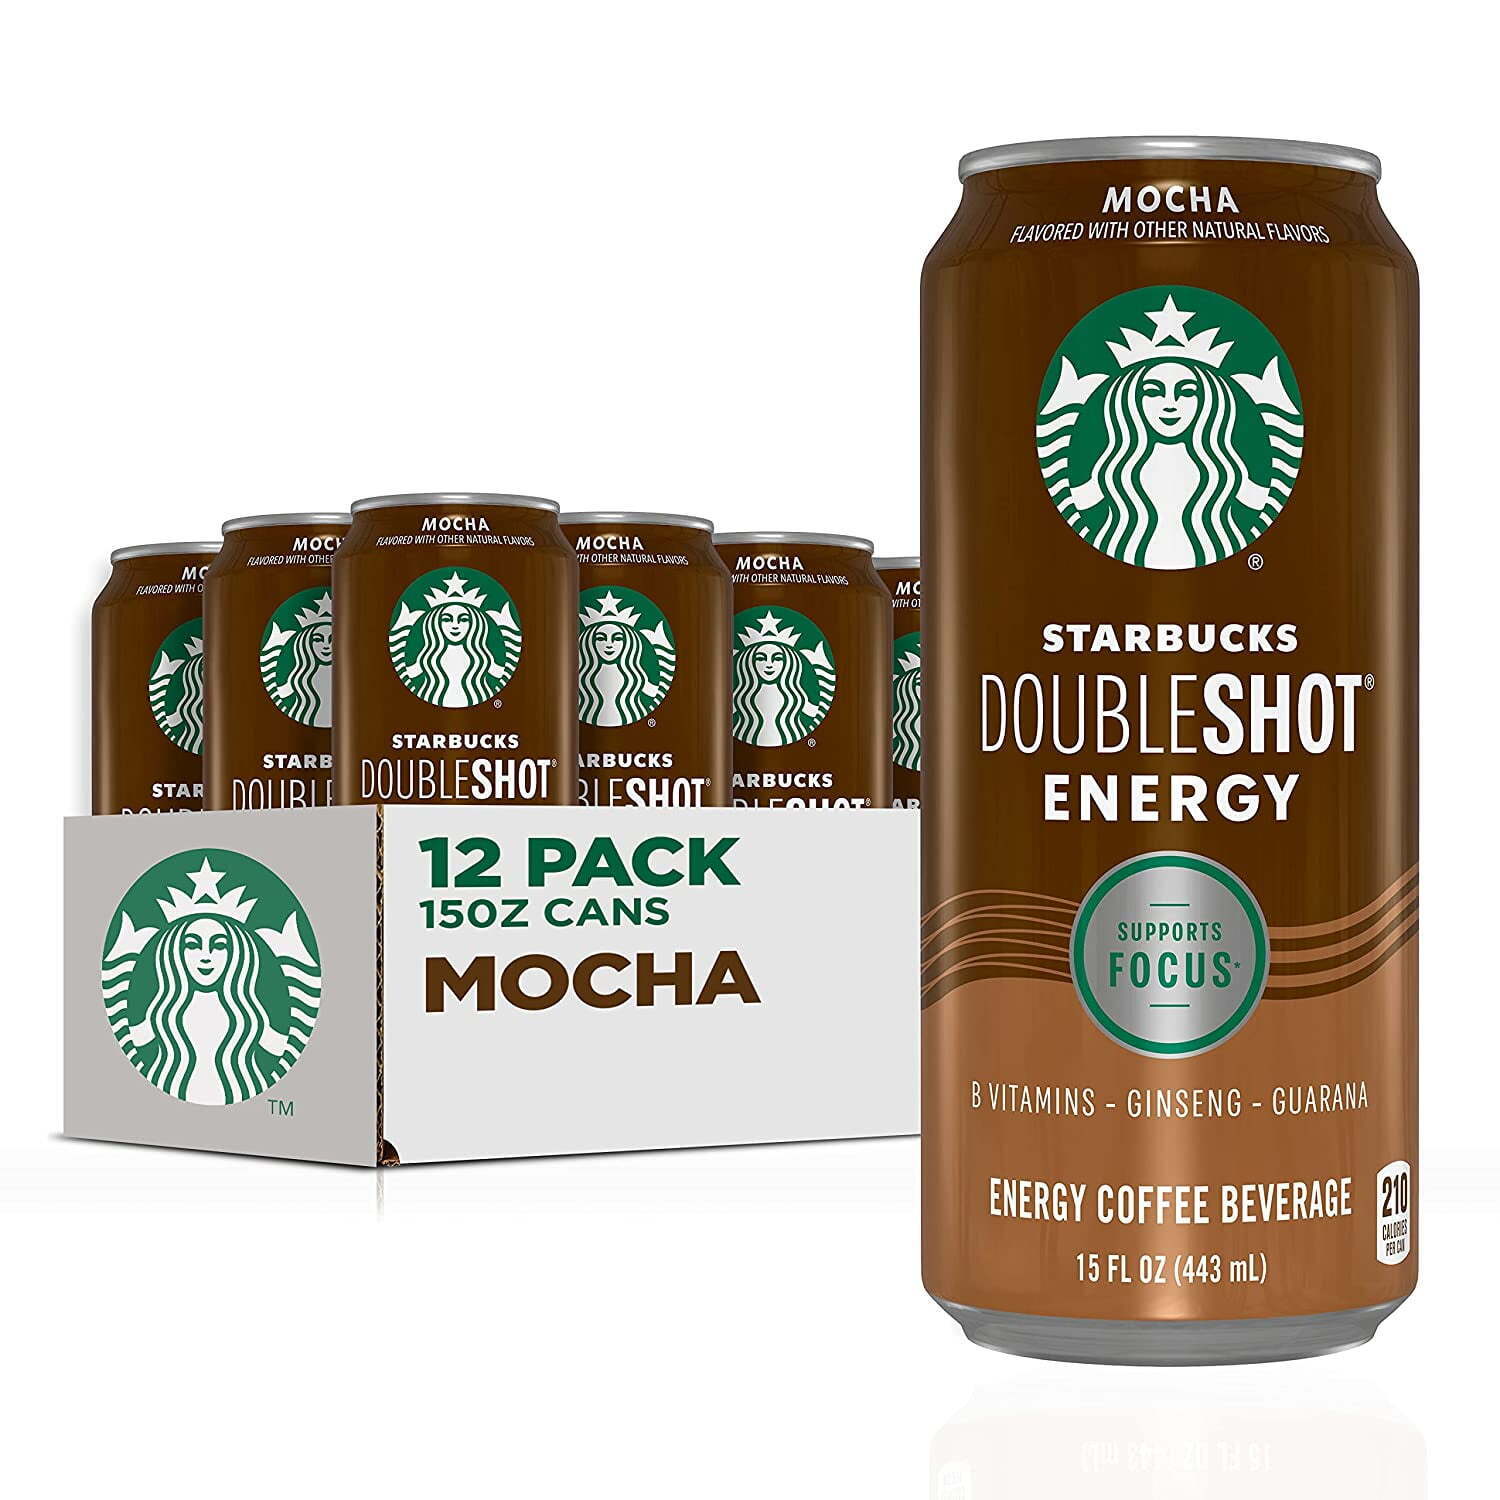 (12 Pack) Starbucks Doubleshot Energy Mocha Coffee Energy Drink, 15 oz Cans